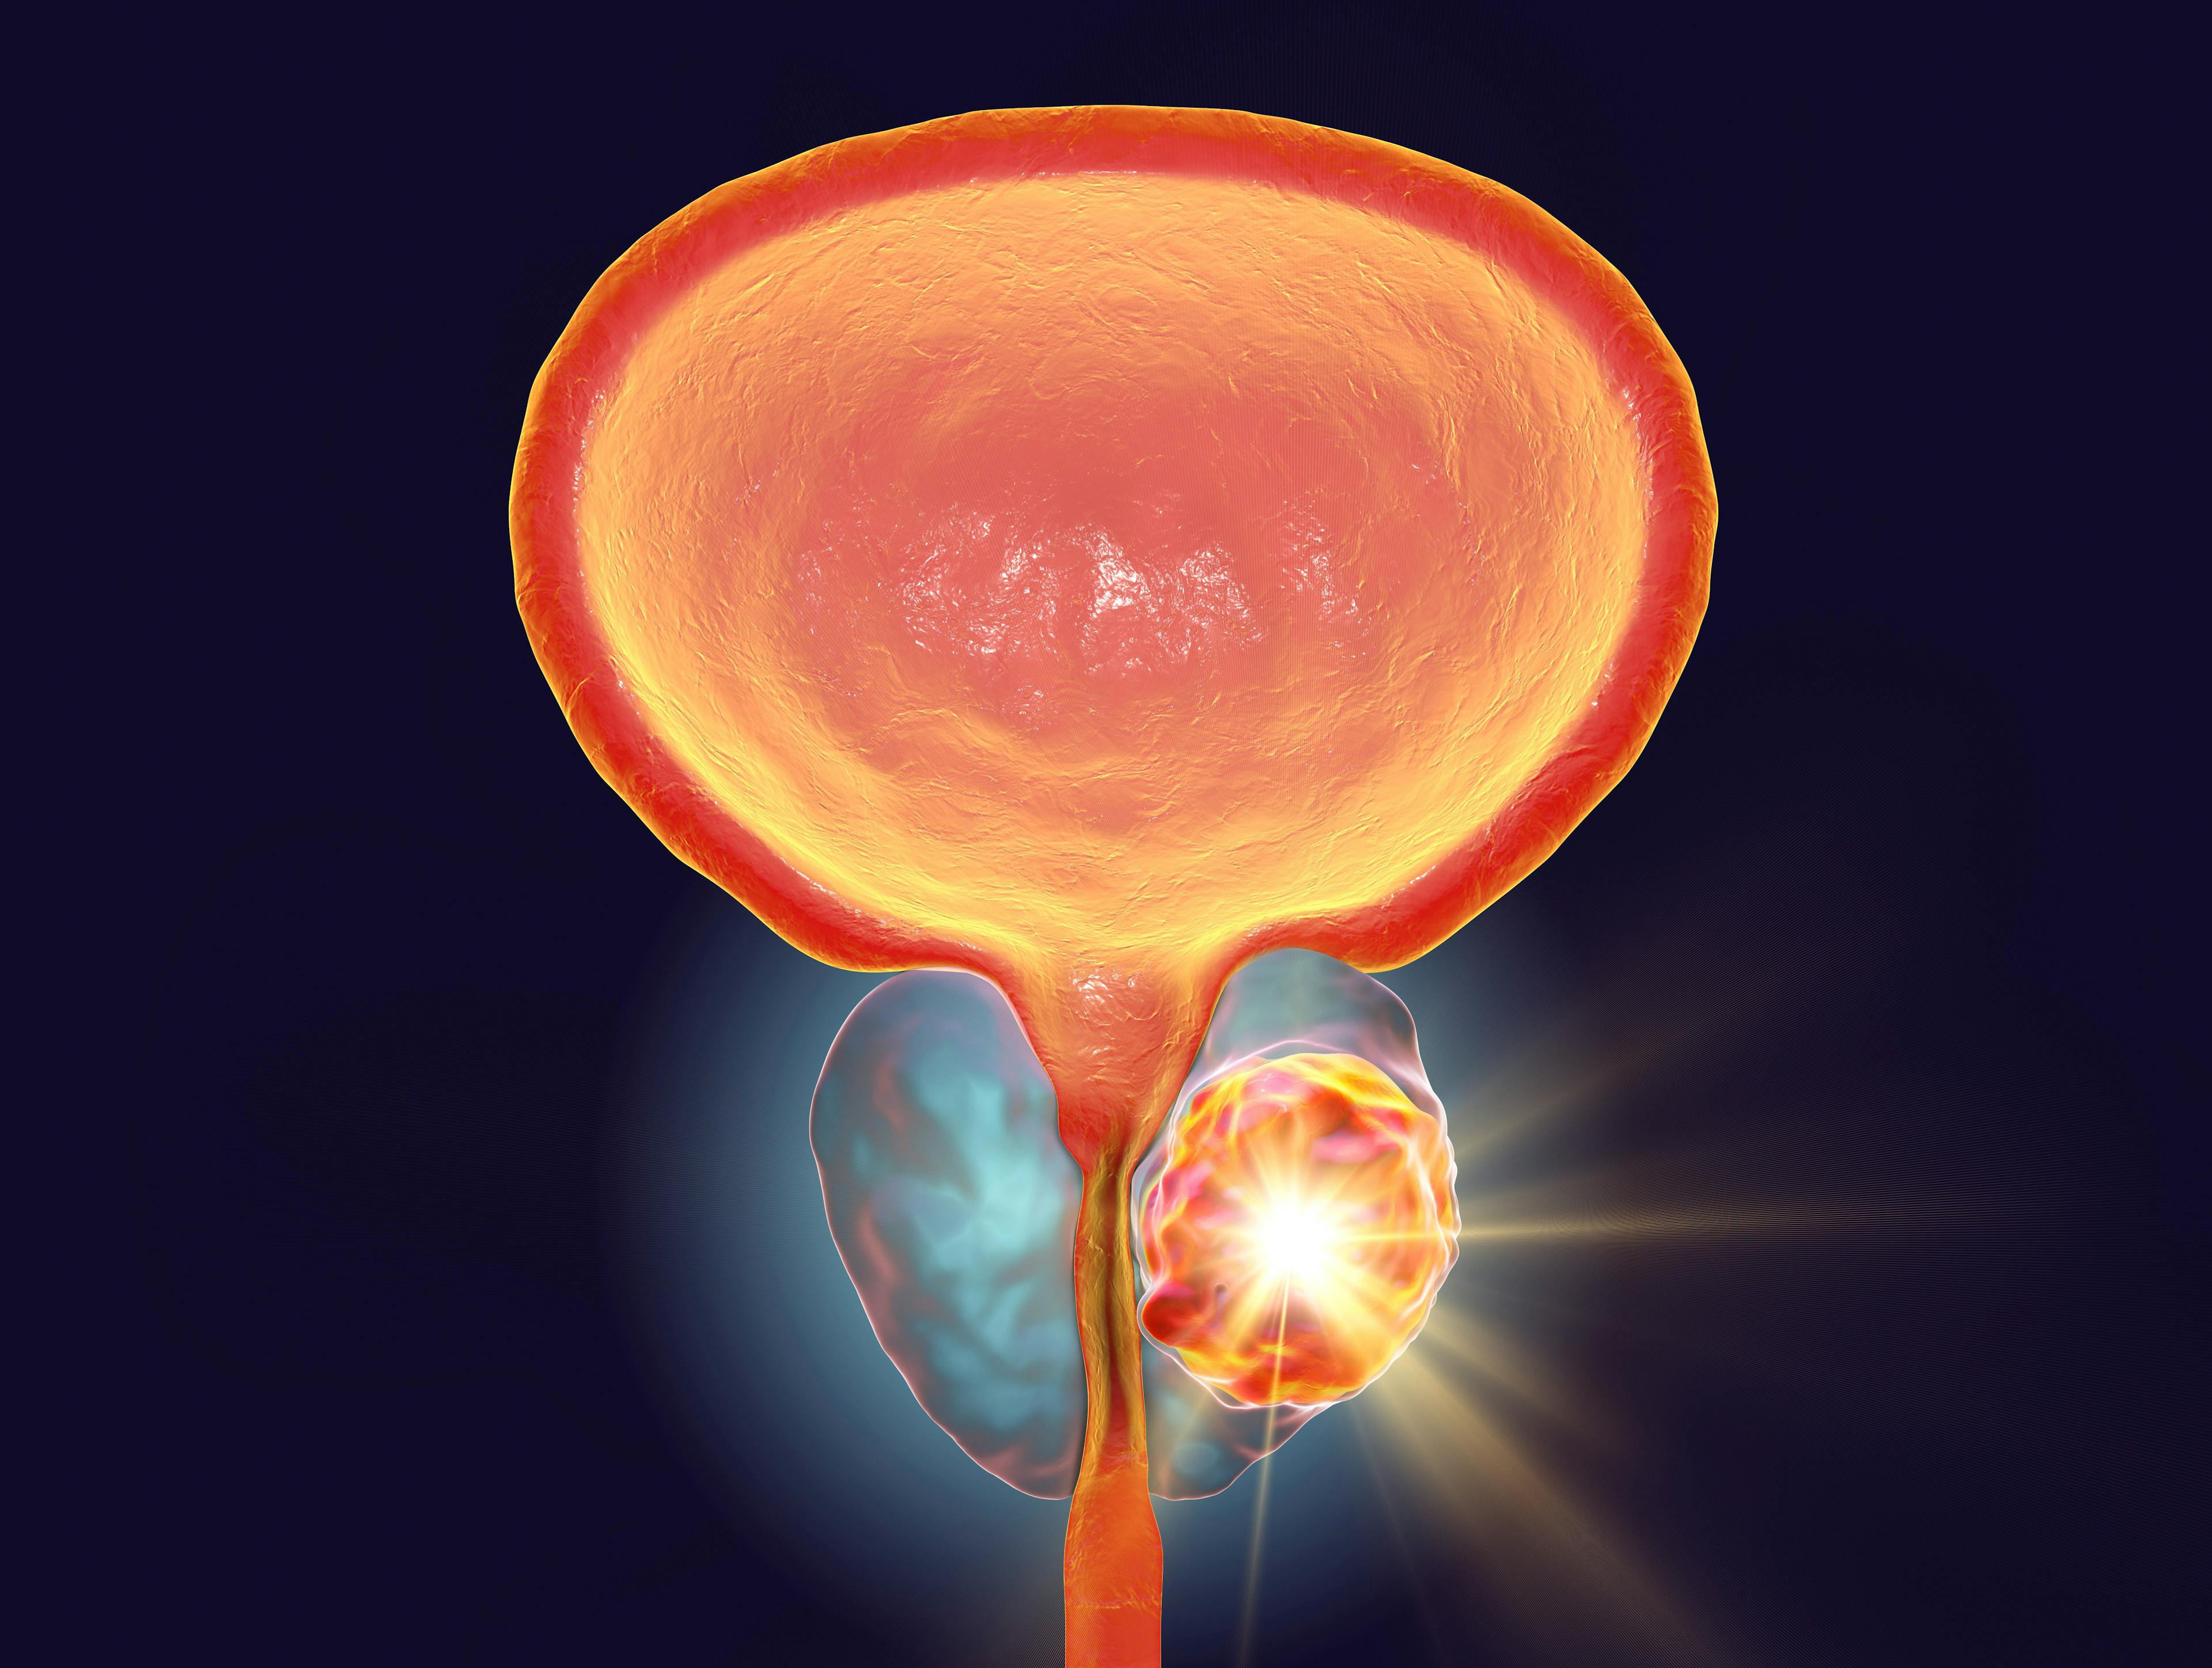 Conceptual image for prostate cancer treatment, 3D illustration showing destruction of a tumor inside prostate gland. Credit: Dr_Microbe - stock.adobe.com